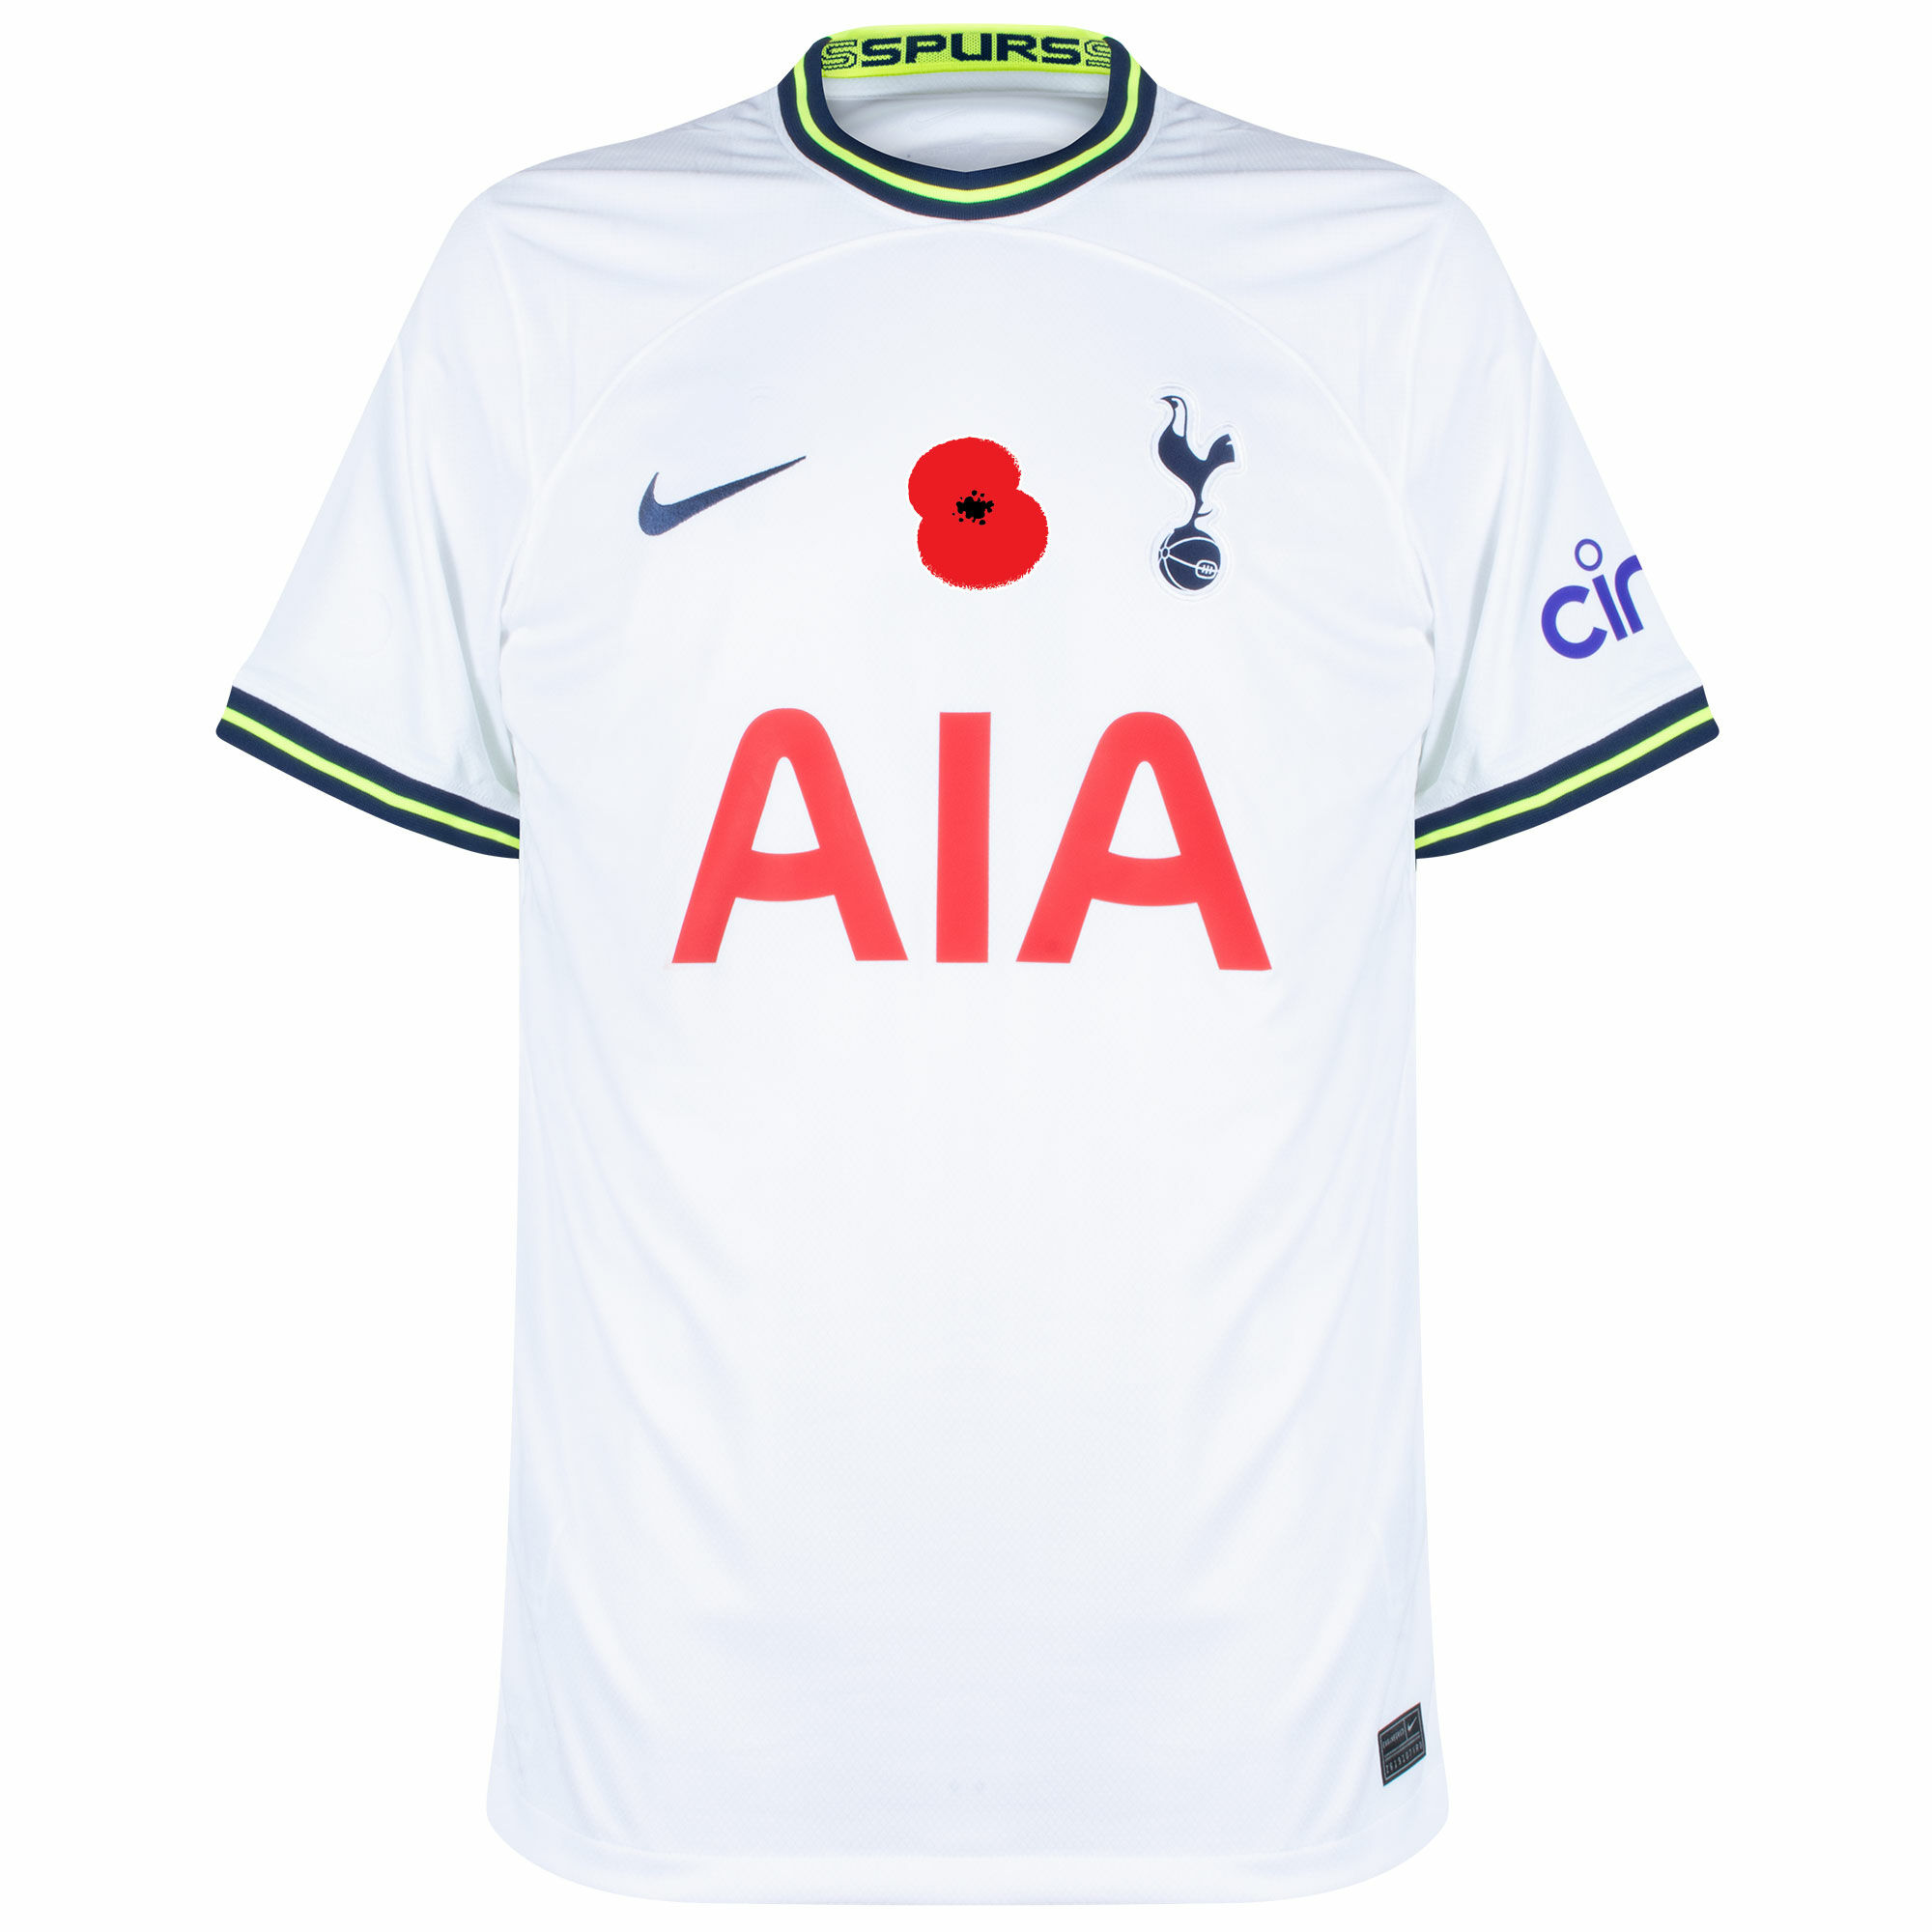 Tottenham Hotspur - Dres fotbalový - logo British Legion Poppy, domácí, bílý, sezóna 2022/23